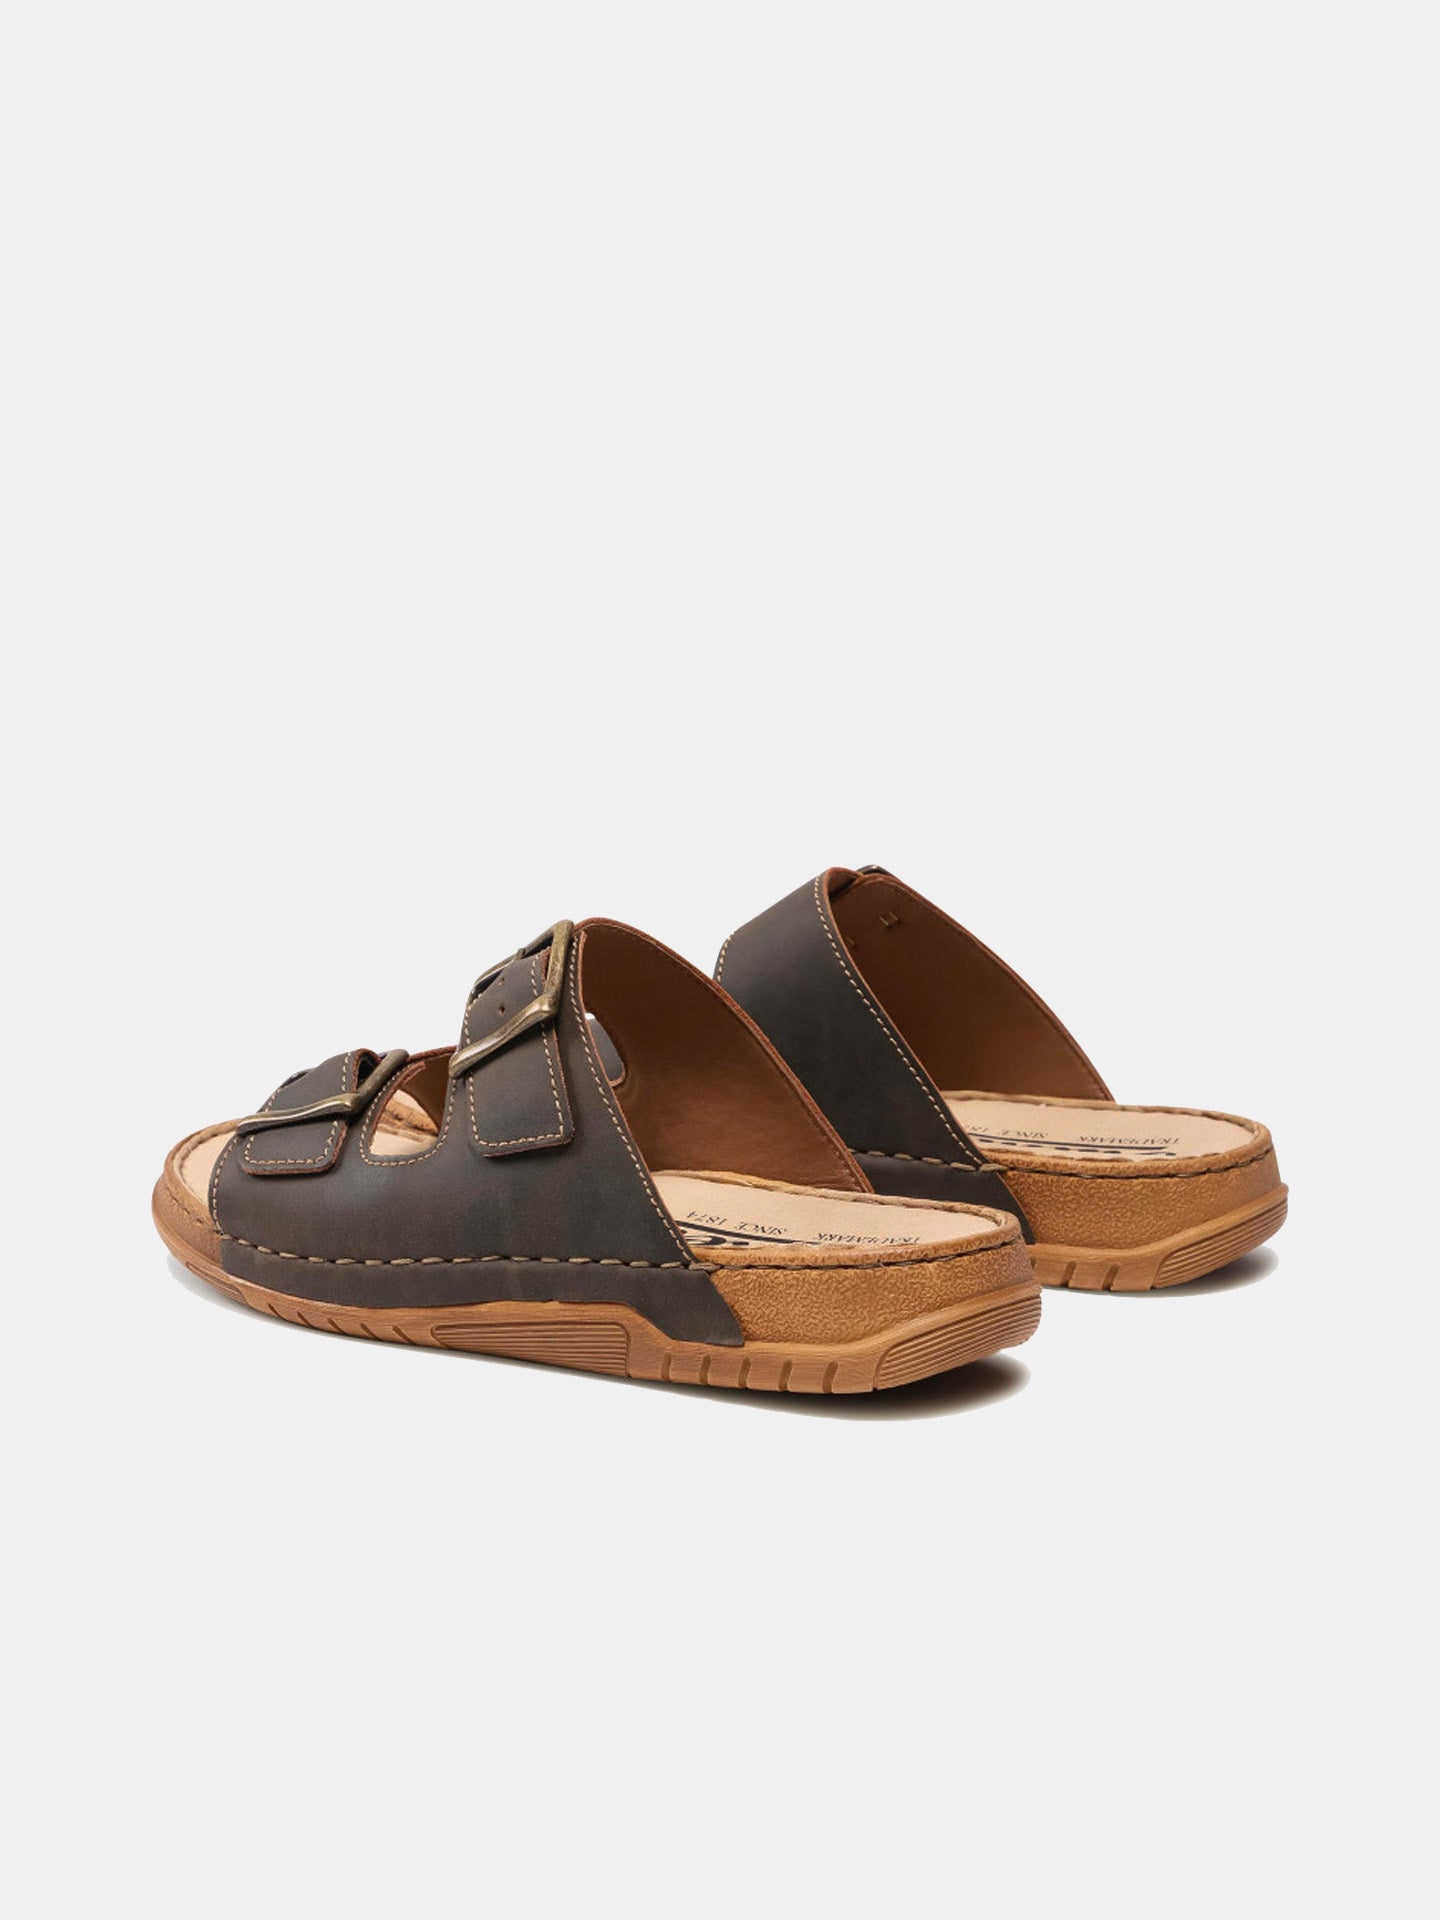 Rieker 25763 Men's Slider Sandals